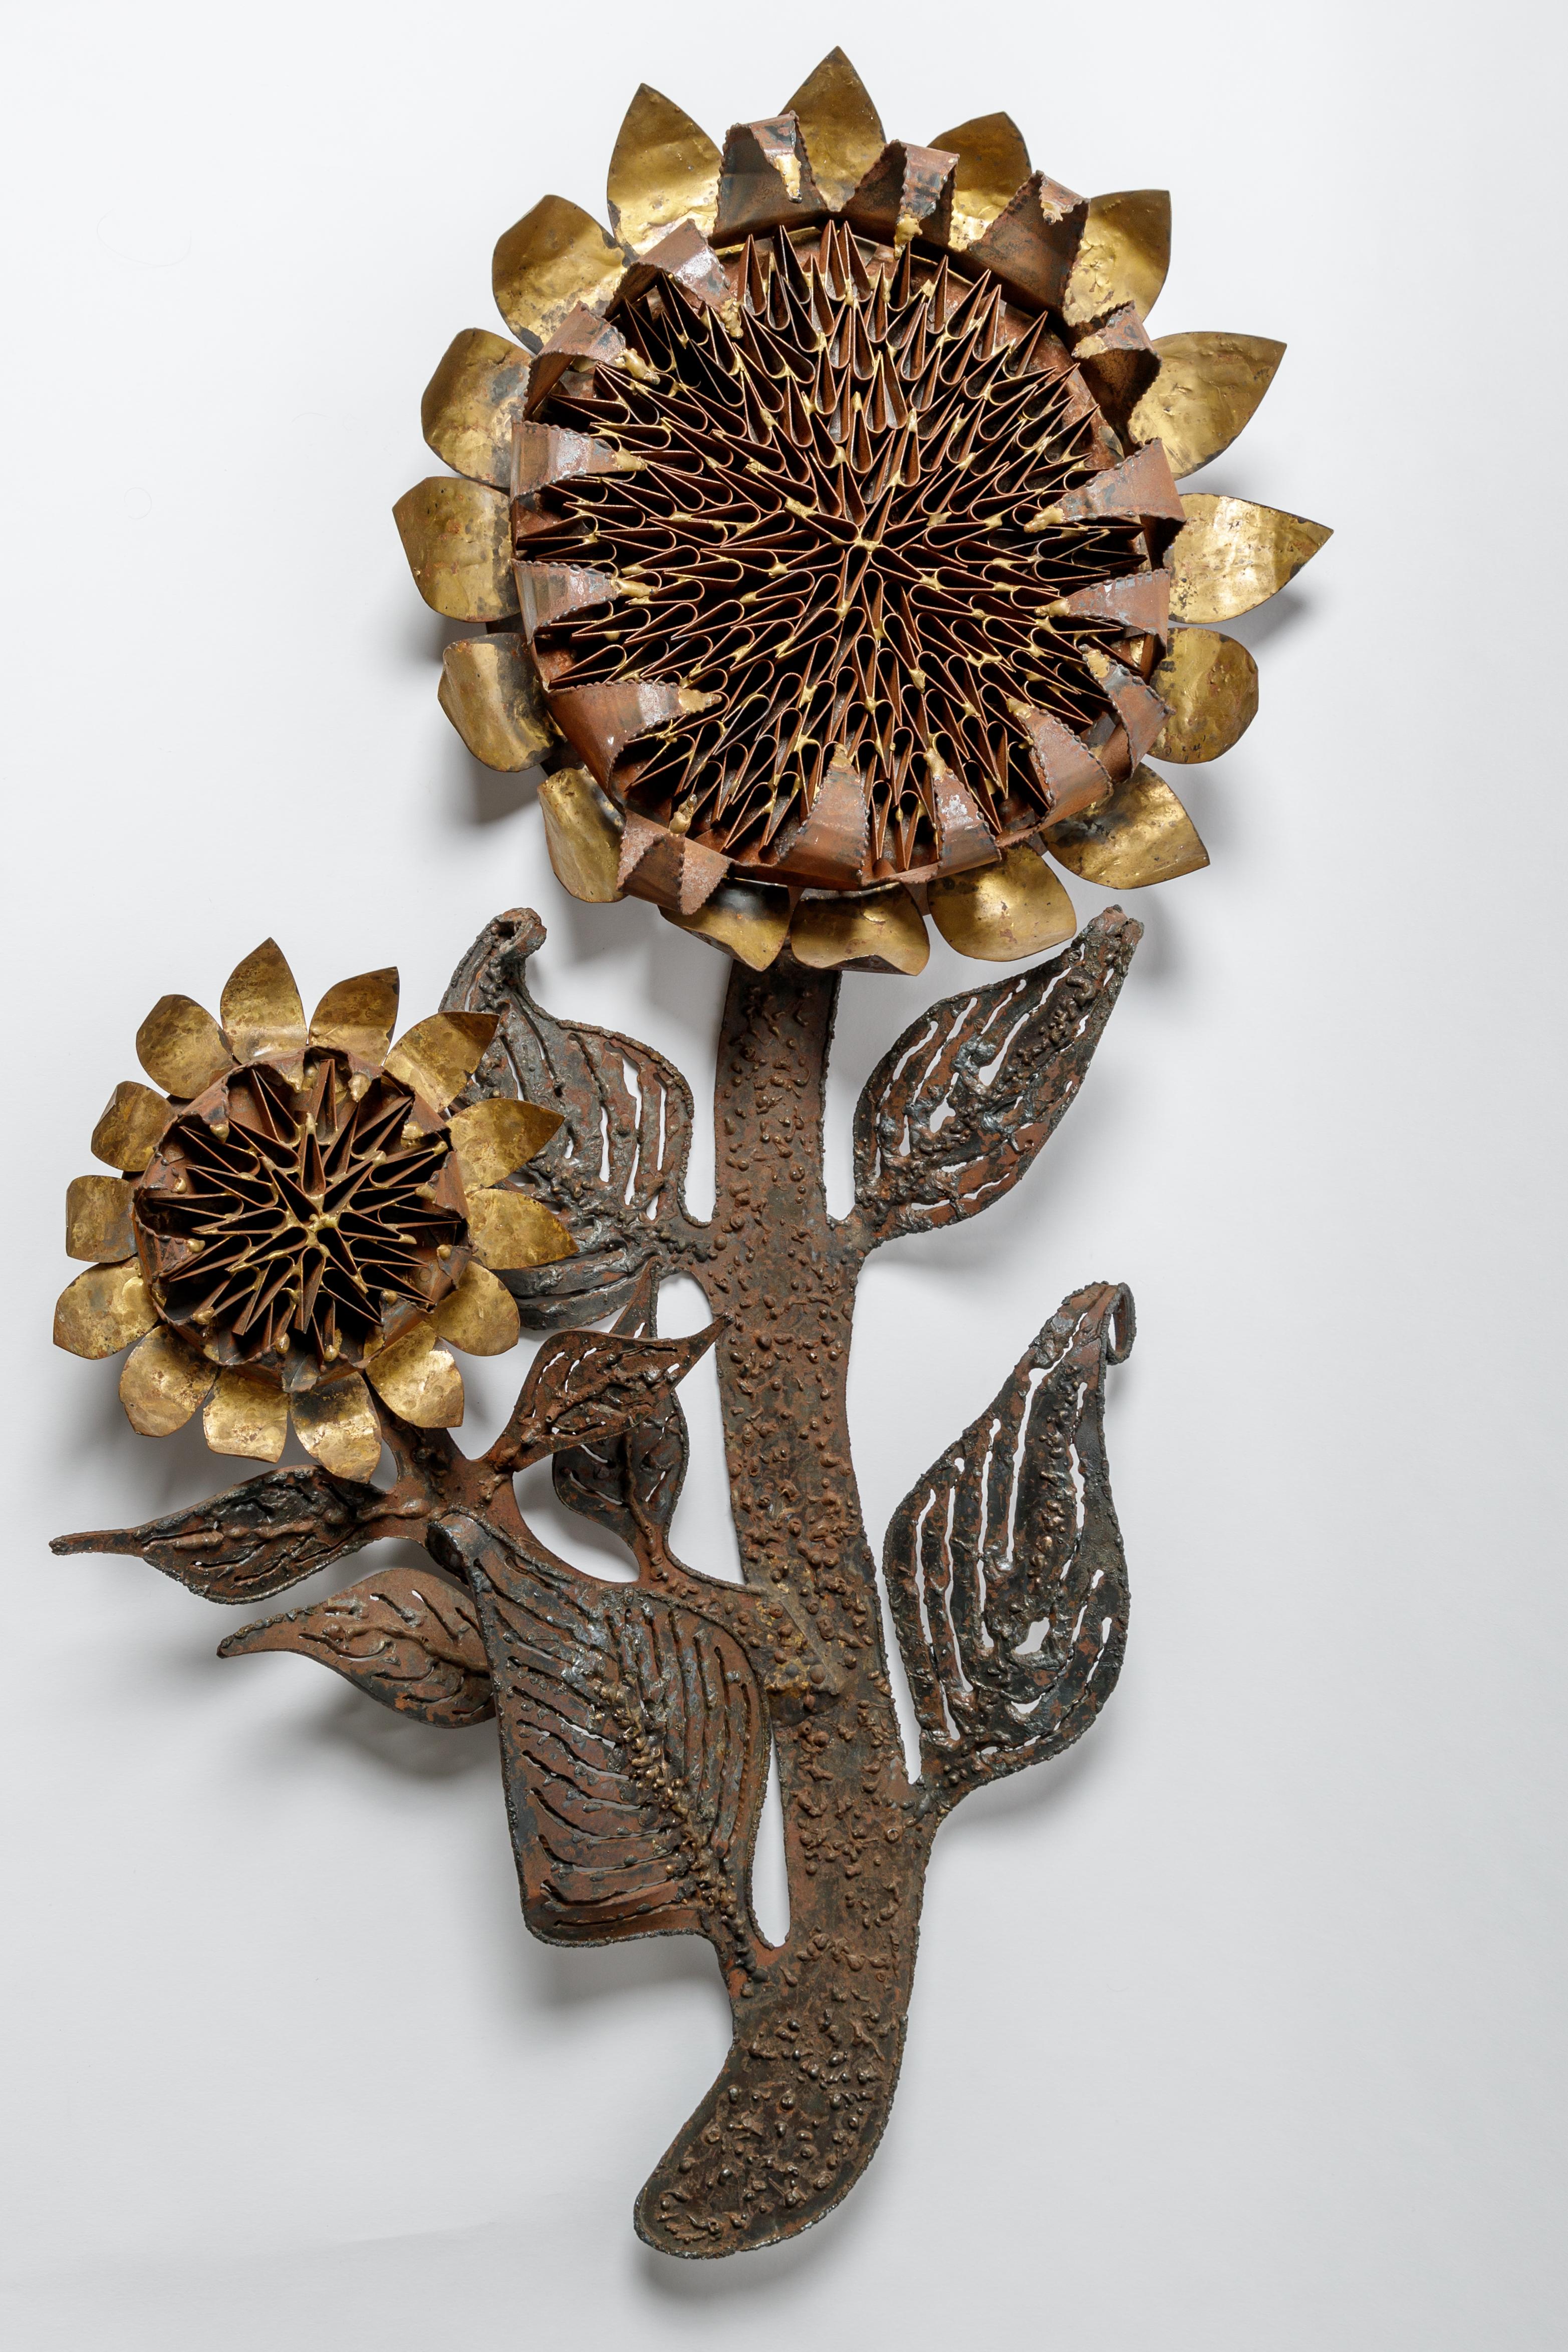 Hand-Crafted Brutalist Metal Sculpture in Sunflower Form